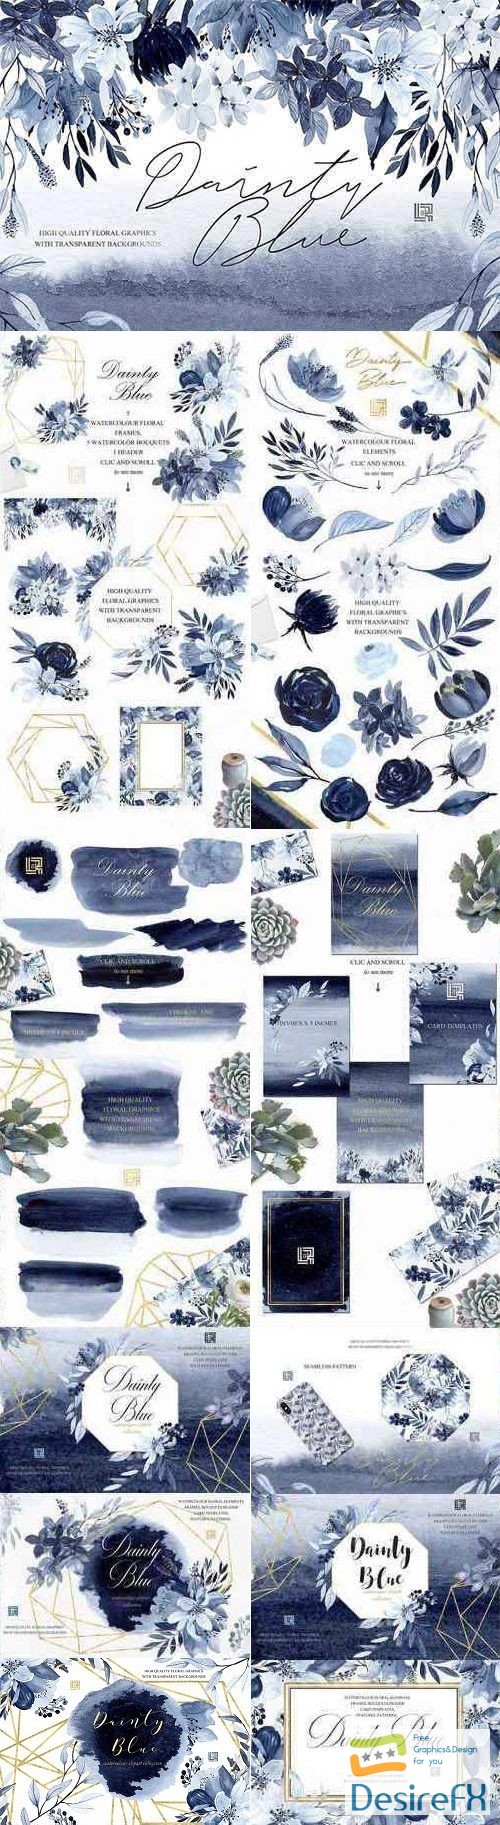 Dainty blue Navy blue flowers - 2414342